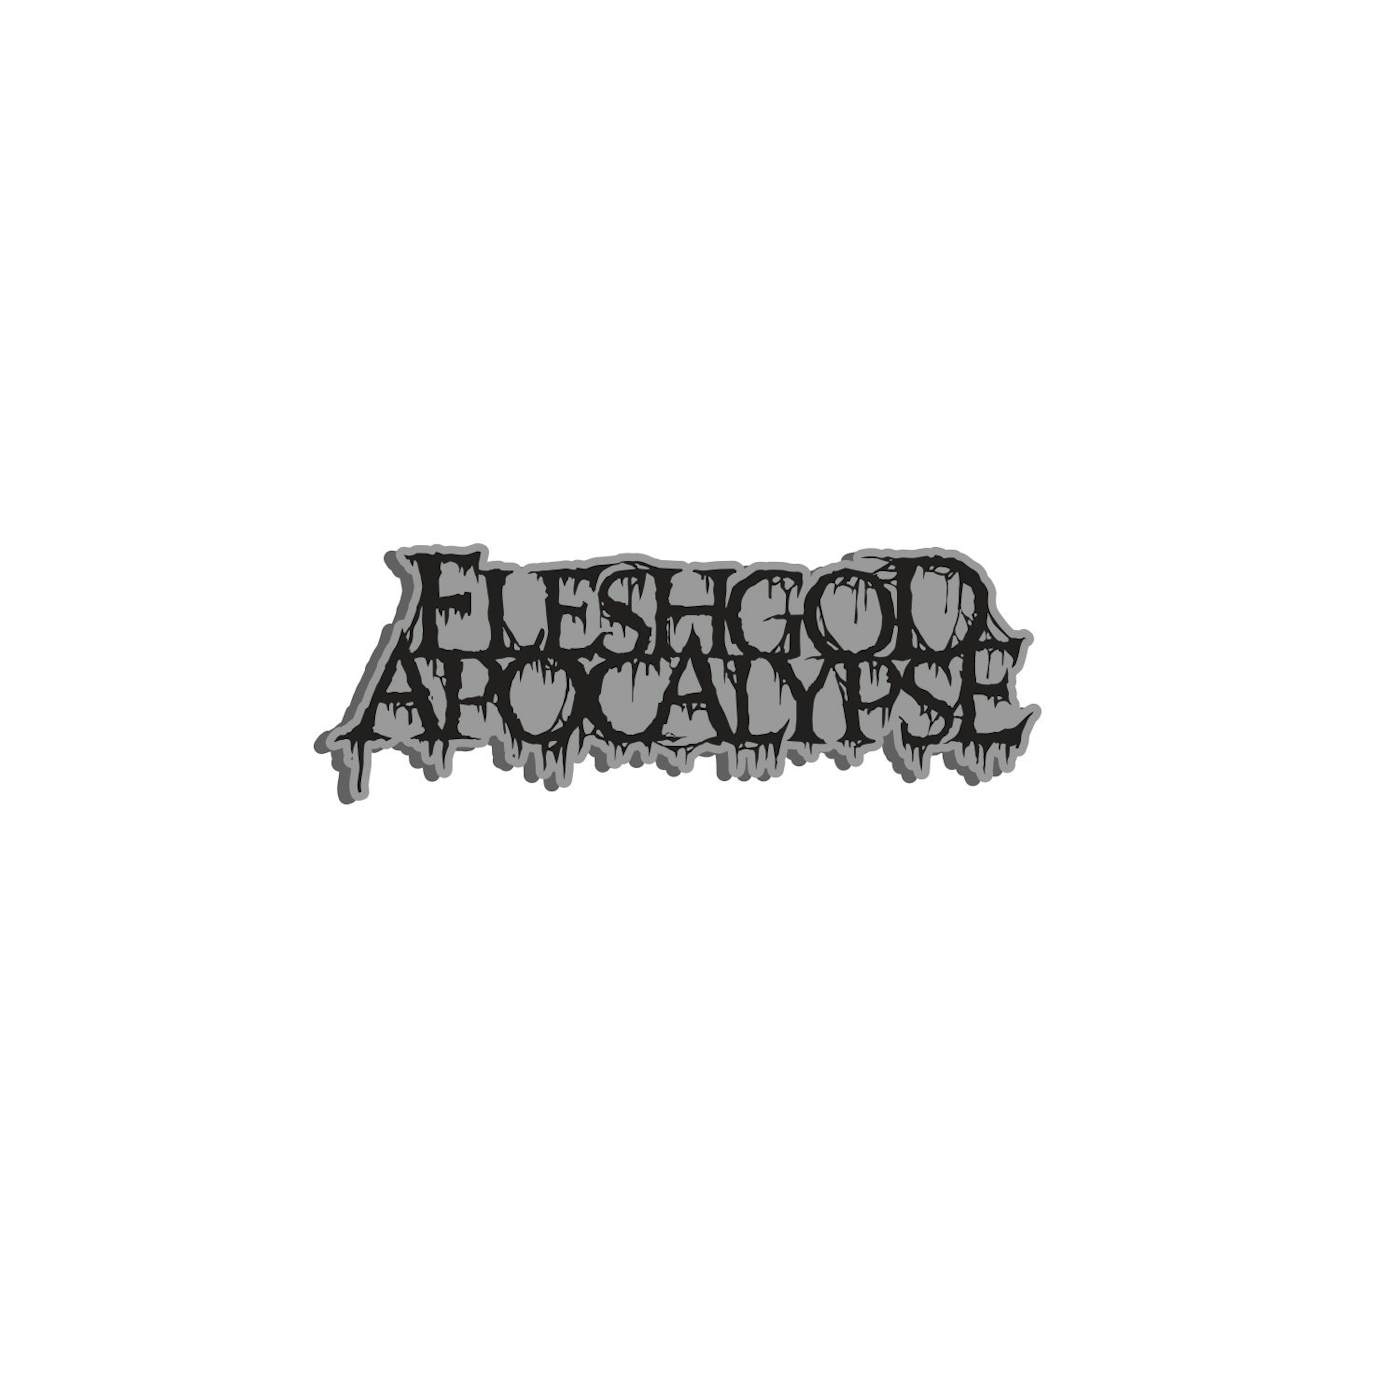 Fleshgod Apocalypse "Logo" Pins